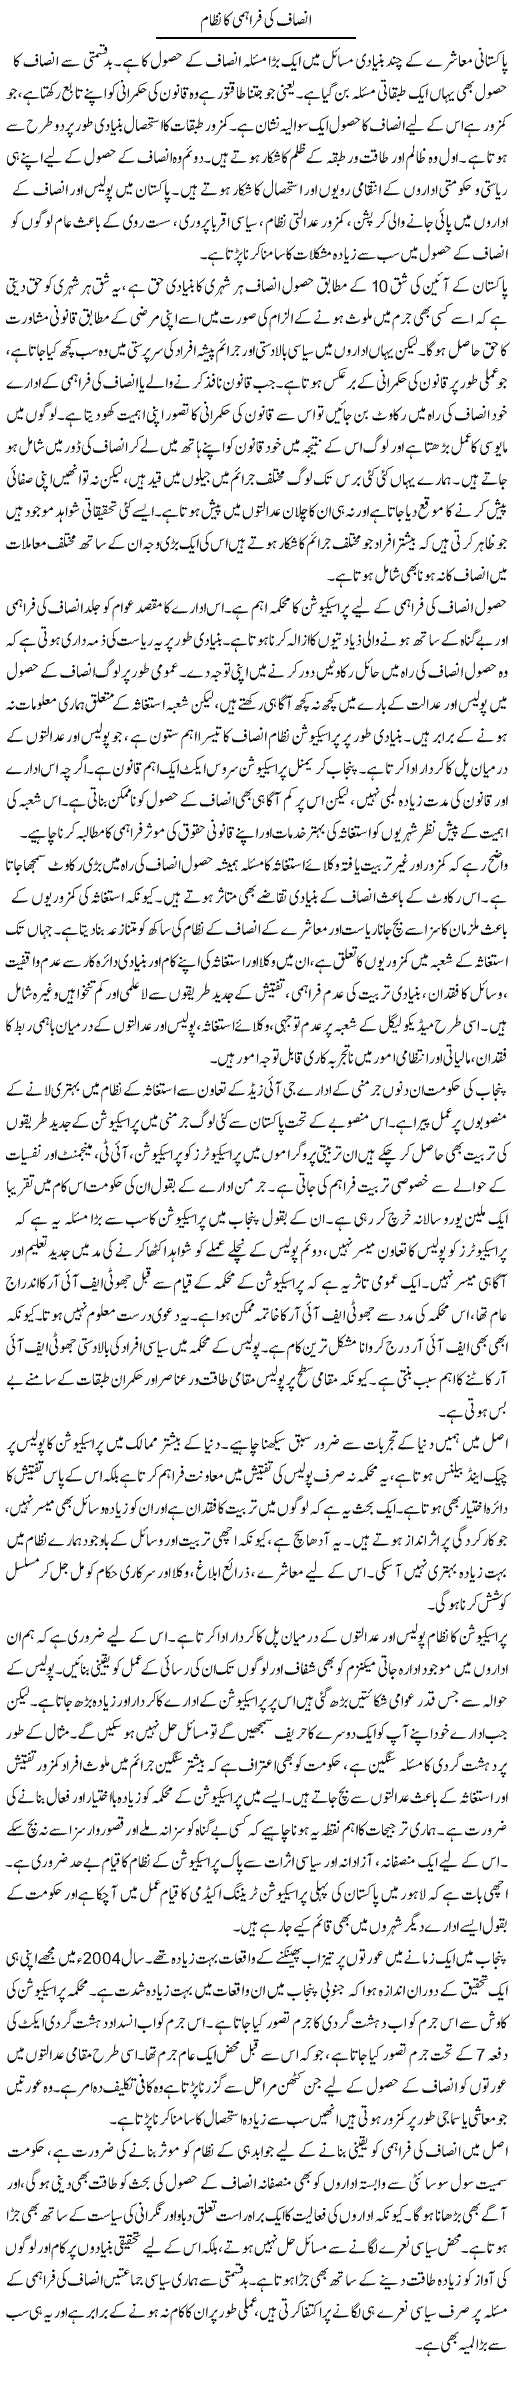 Insaaf Ki Farahmi Ka Nizam | Salman Abid | Daily Urdu Columns